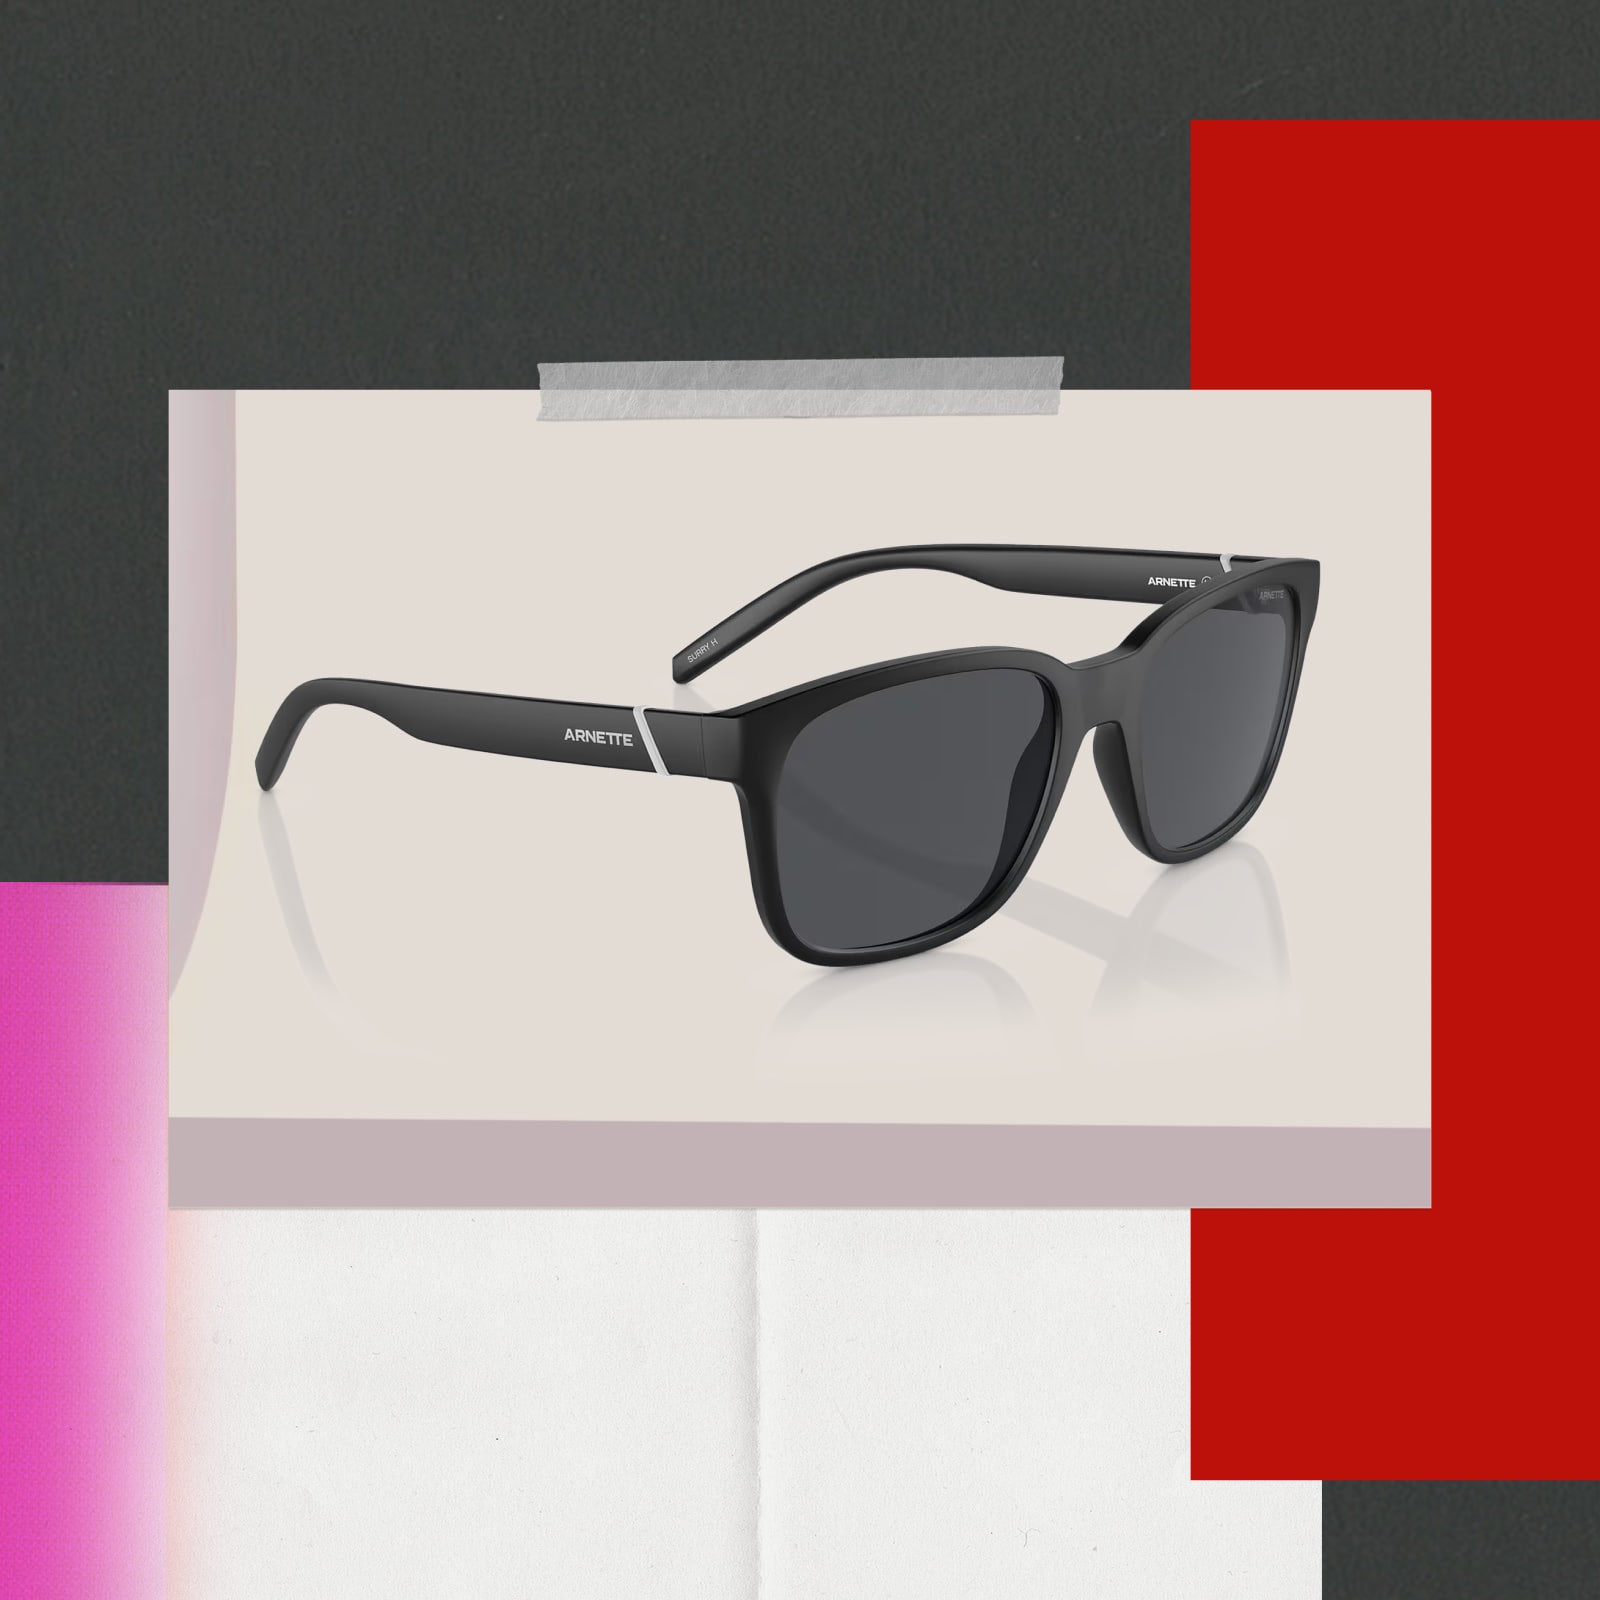 Sunglass Hut Collection Credit Card & Sunglasses | Sunglass Hut USA